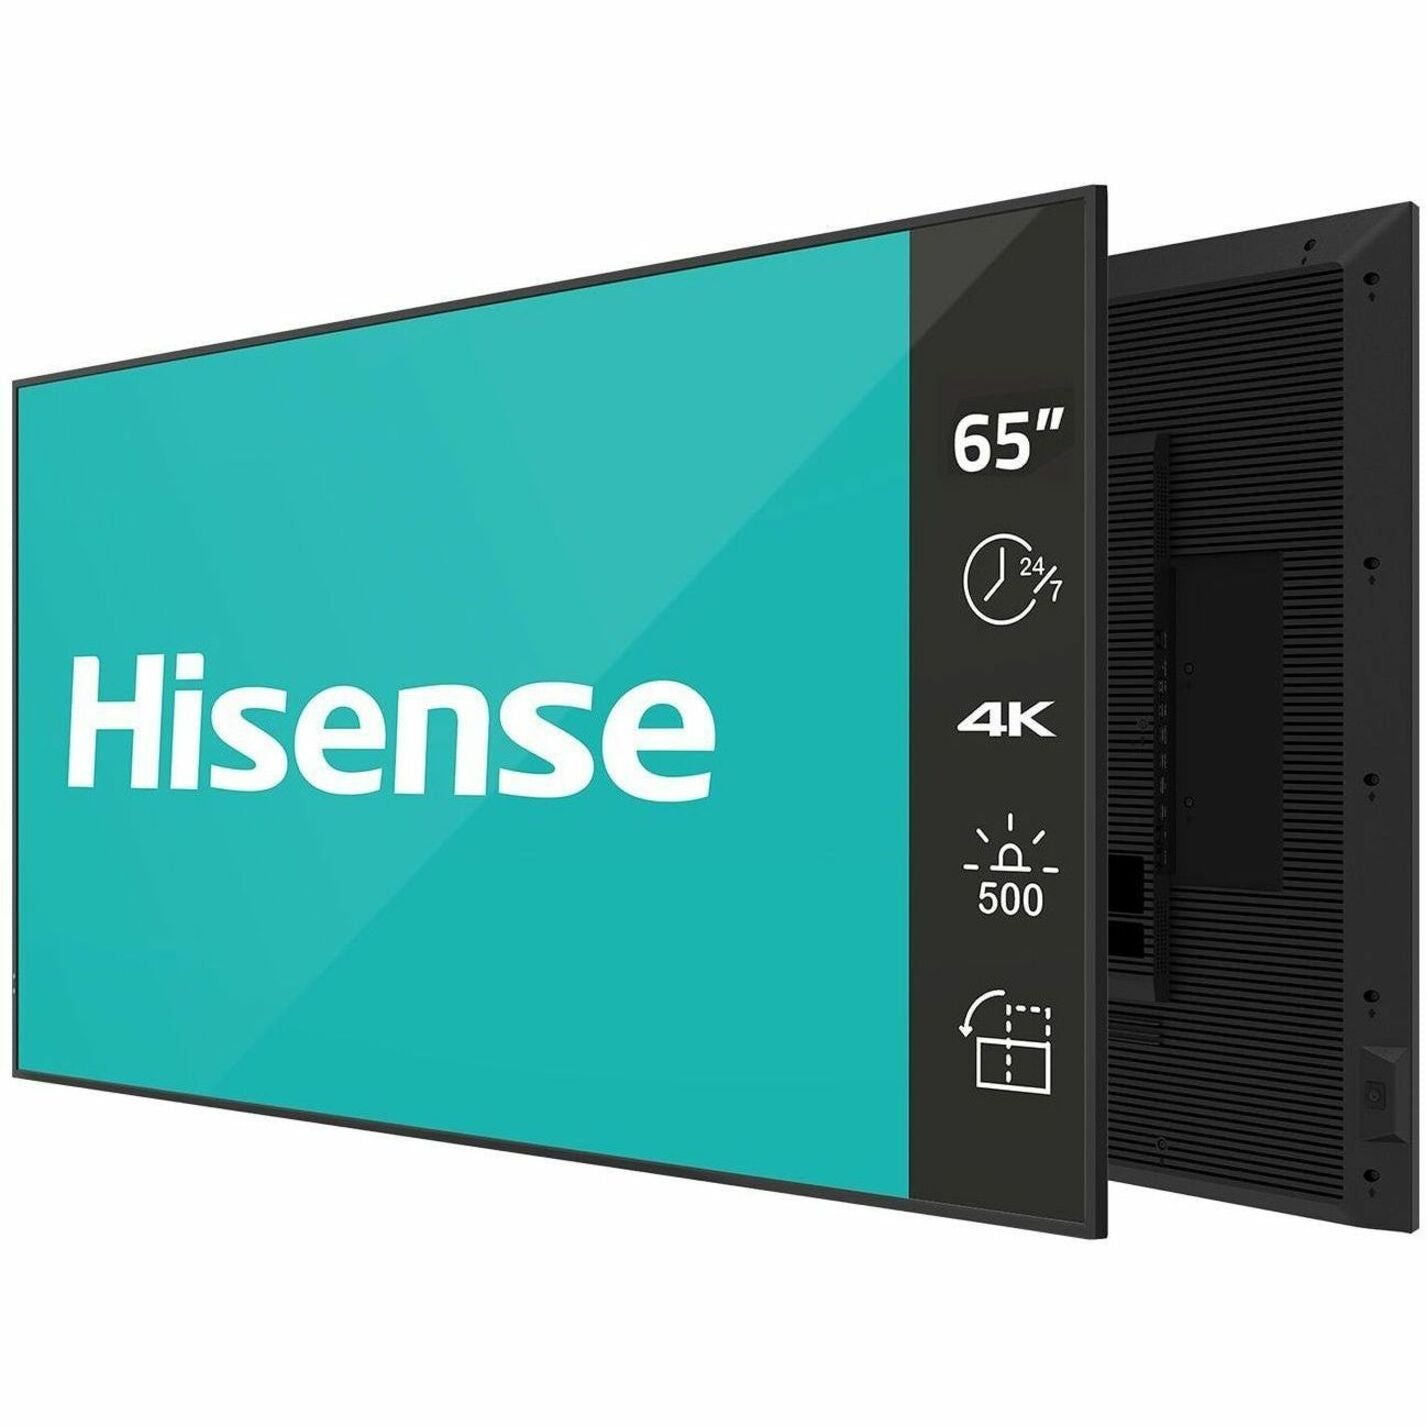 Hisense 65" 4K UHD Digital Signage Display - 24/7 Operation (65DM66D)